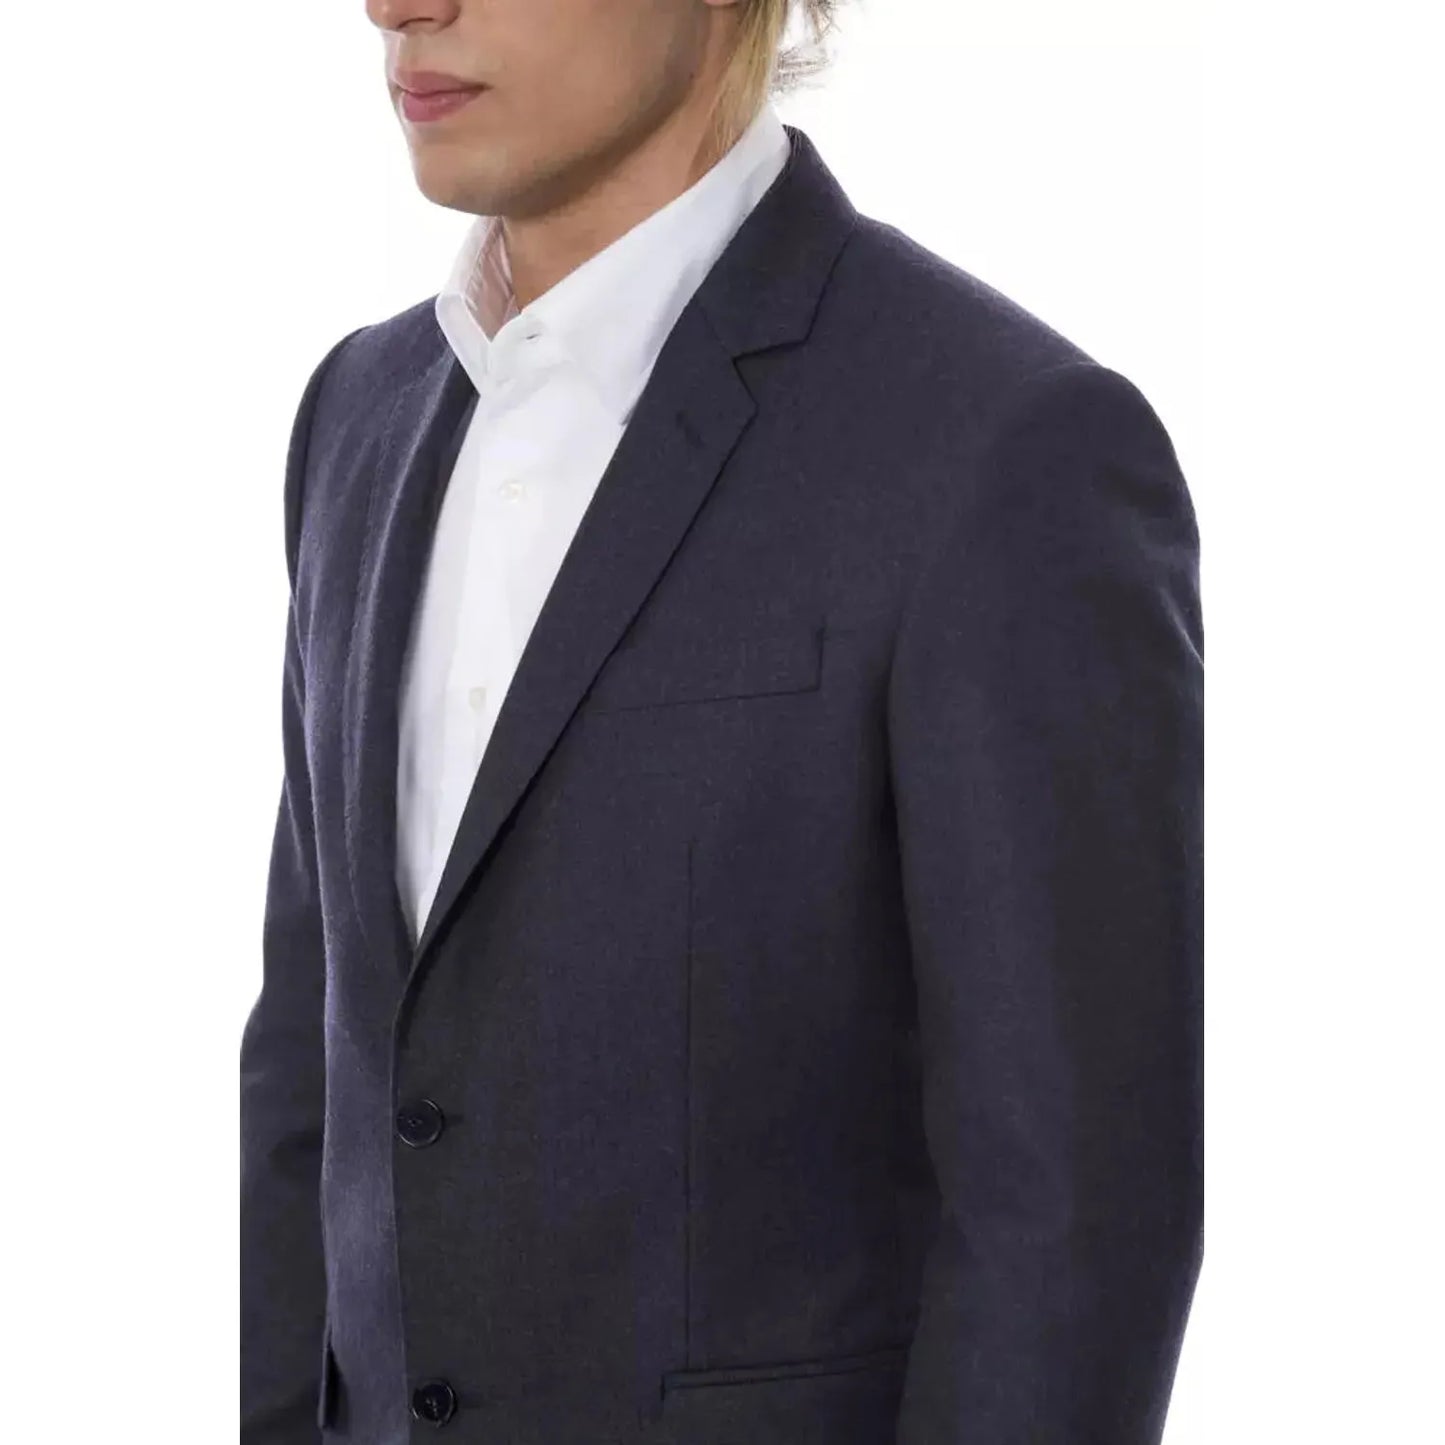 Verri Elegant Blue Wool Single-Breasted Blazer vblu-blazer-5 stock_product_image_18298_1262868081-15-22792427-971.webp